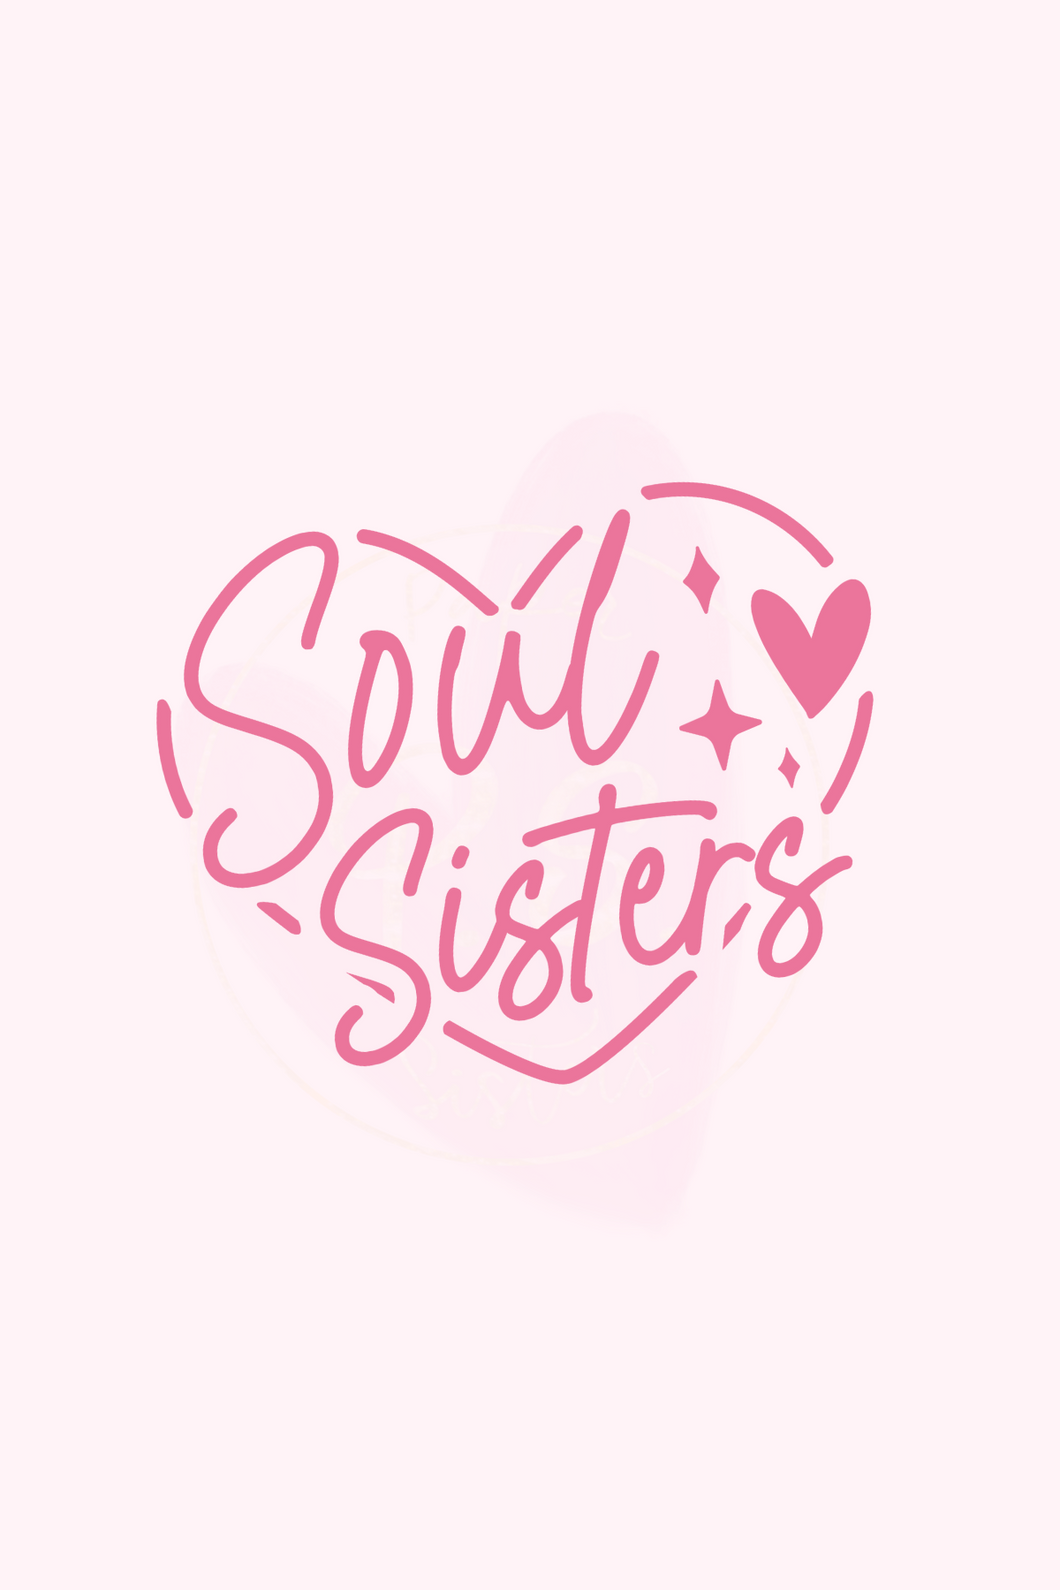 Soul Sisters Greeting Card